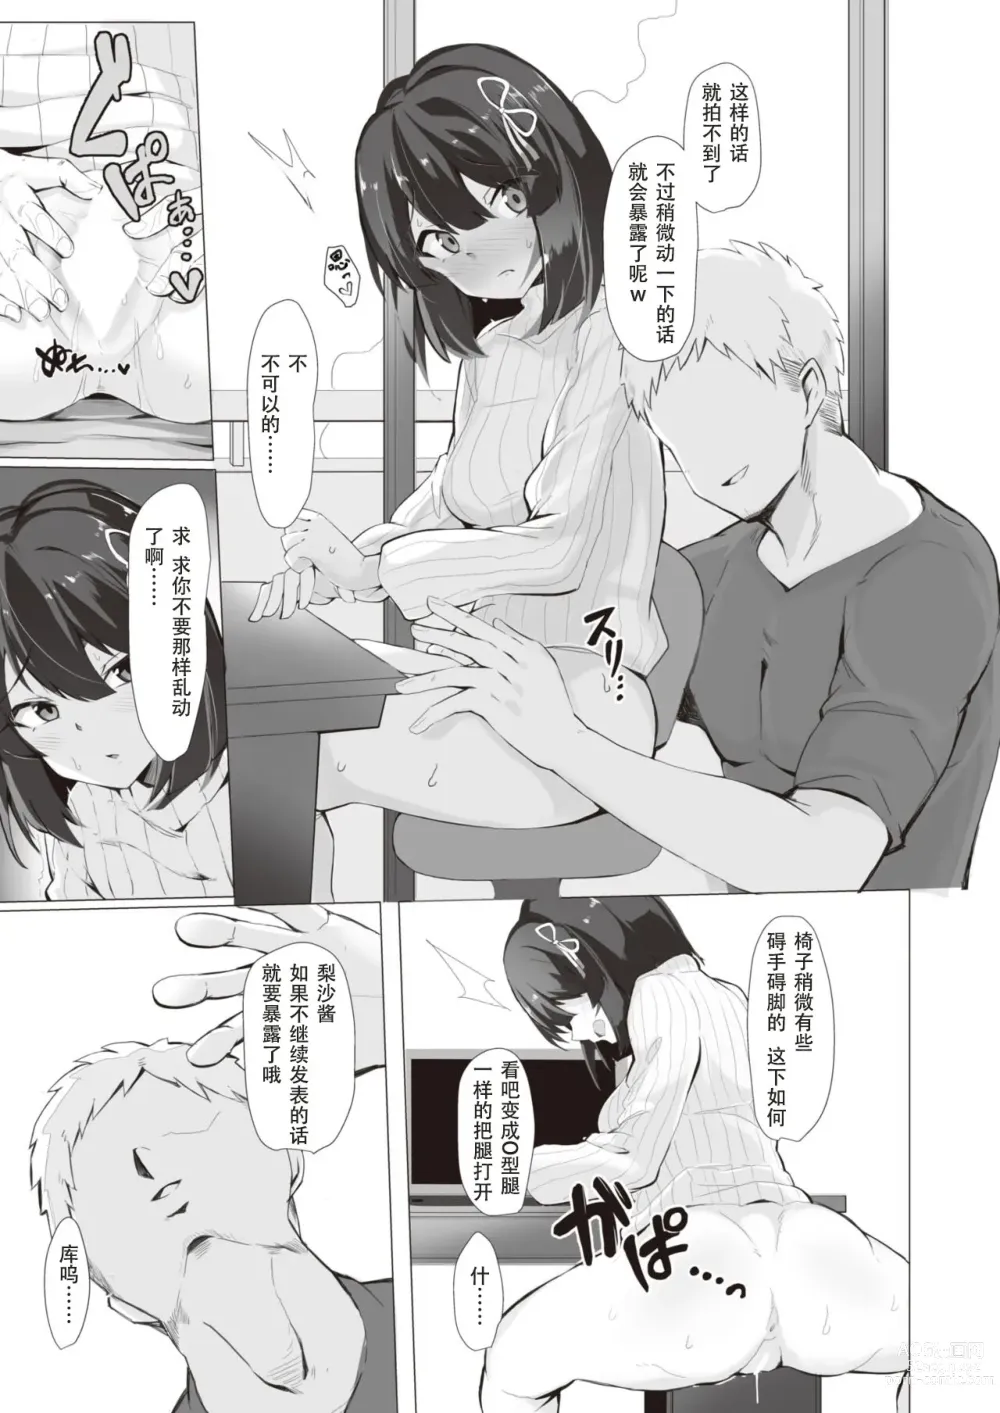 Page 7 of manga Koujimaooshi - Study or Fuck?